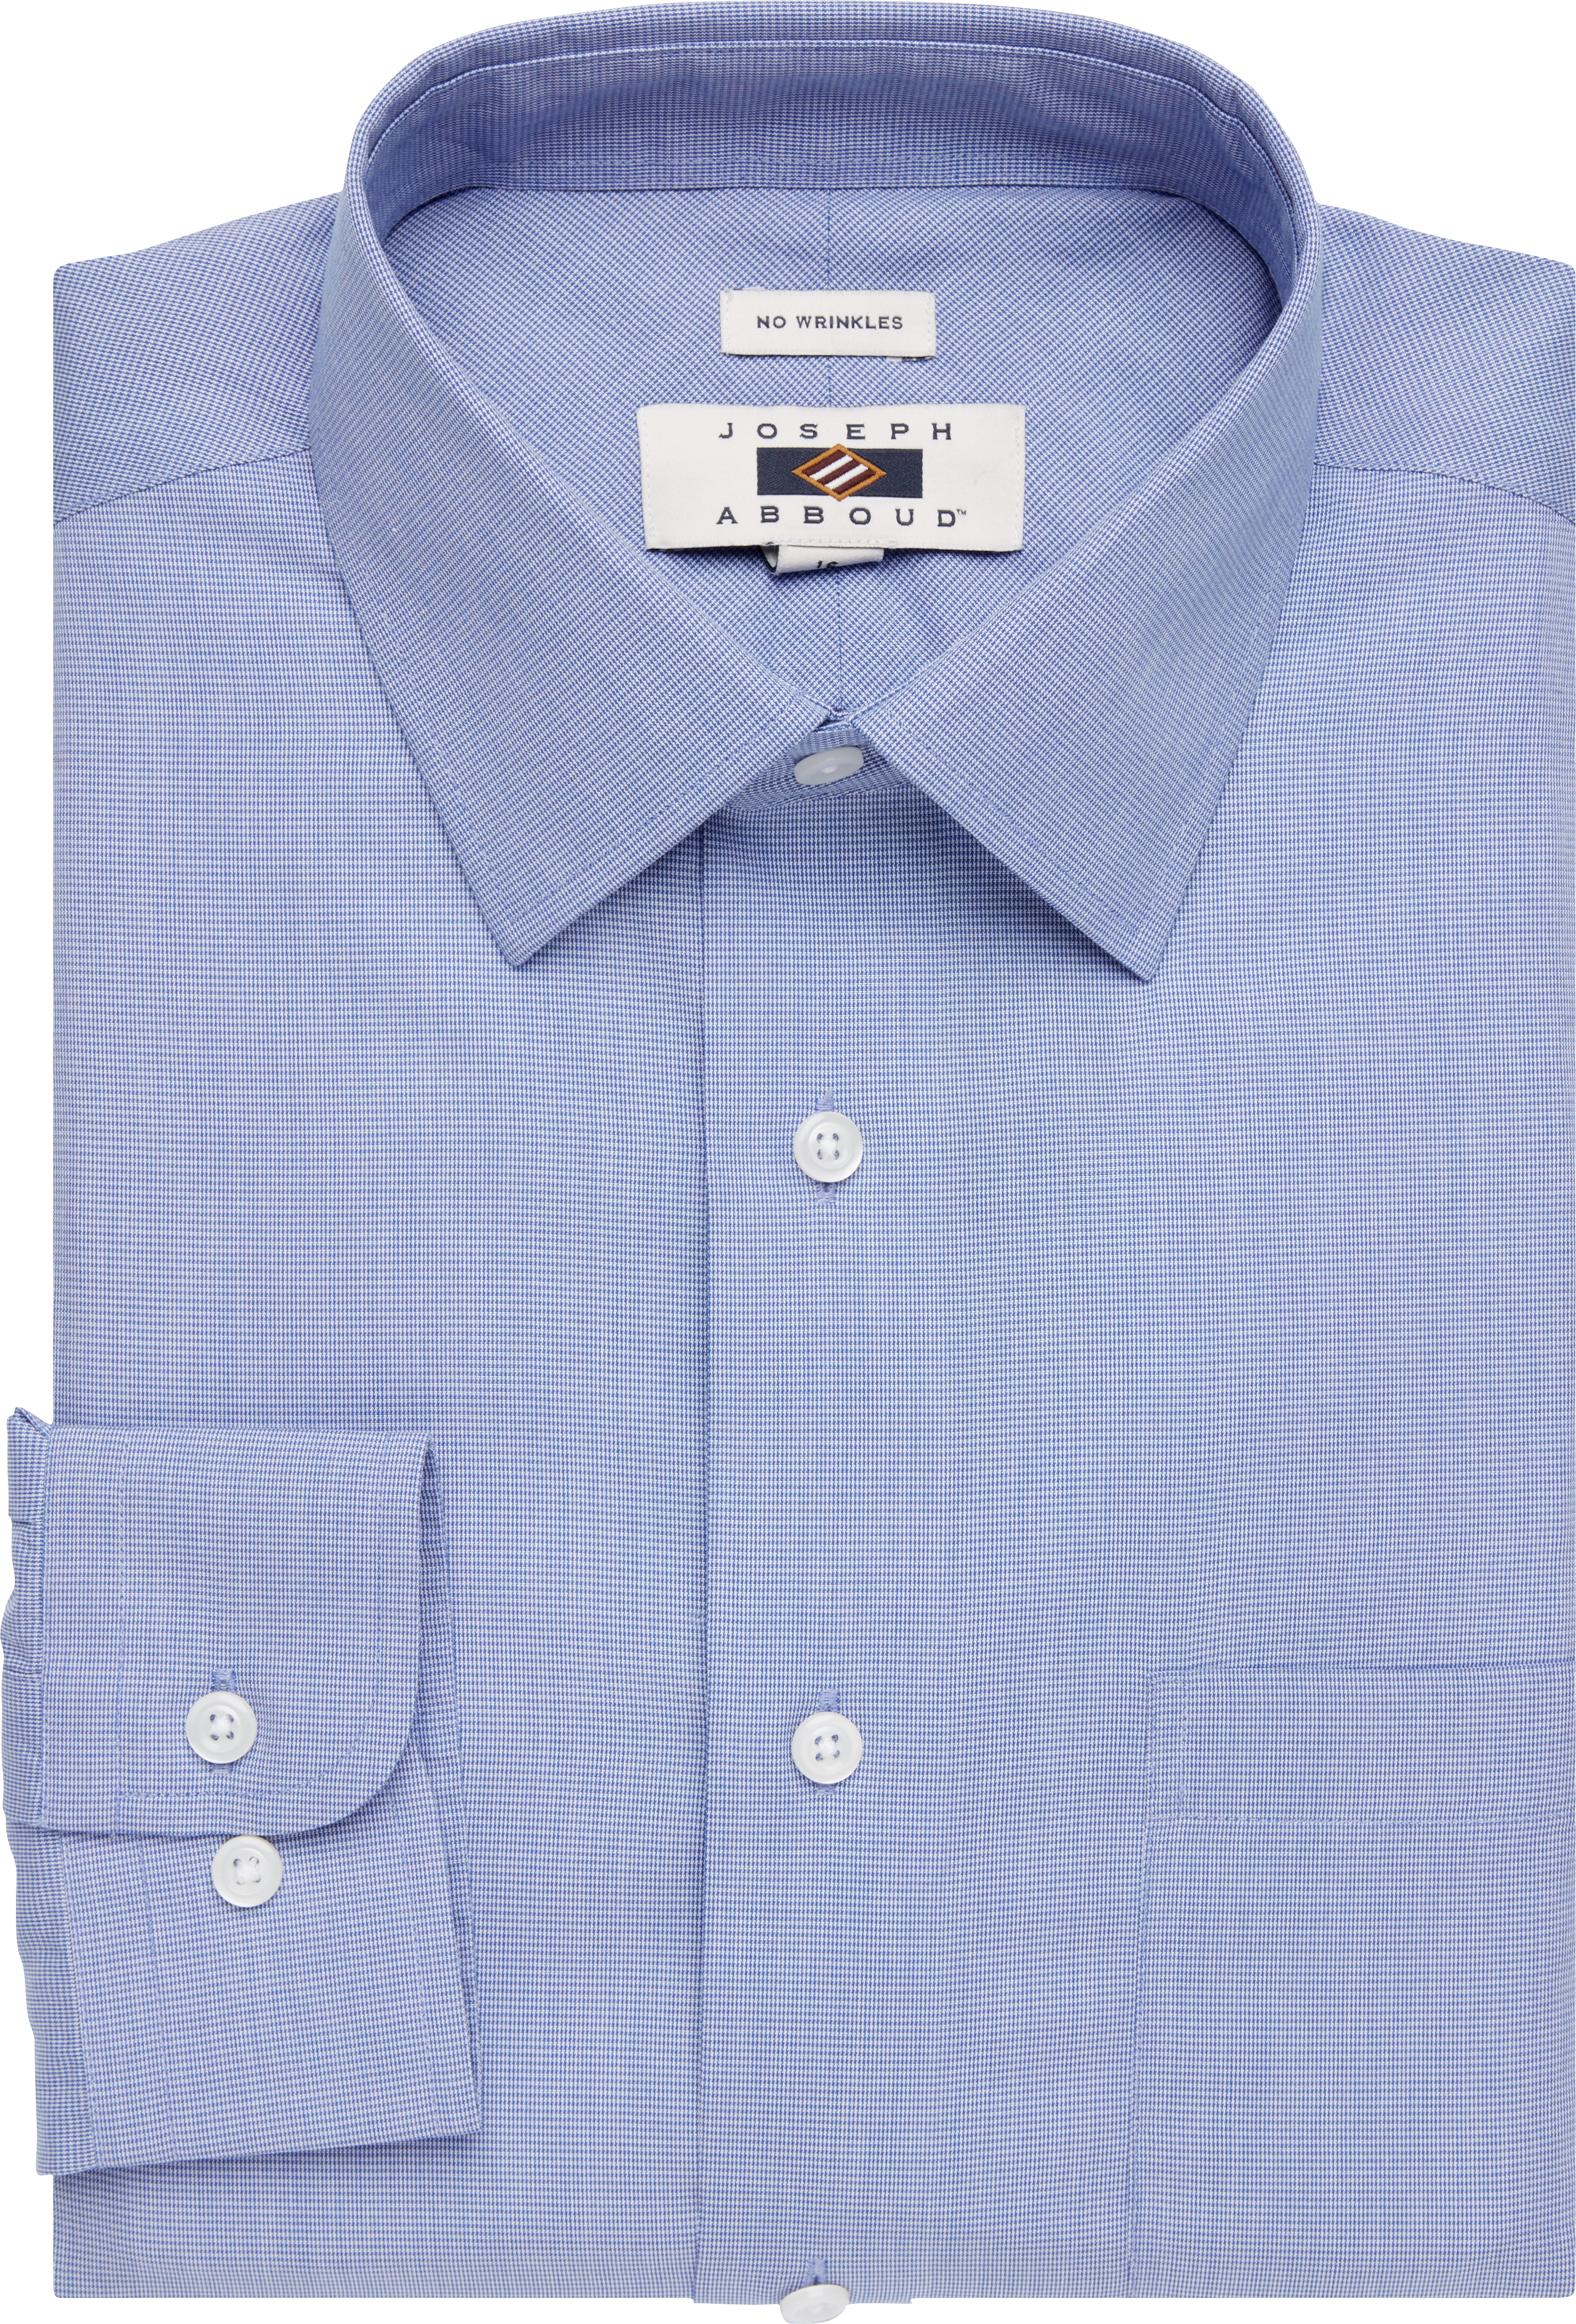 Joseph Abboud Blue Check Egyptian Cotton Dress Shirt - Men's Classic ...